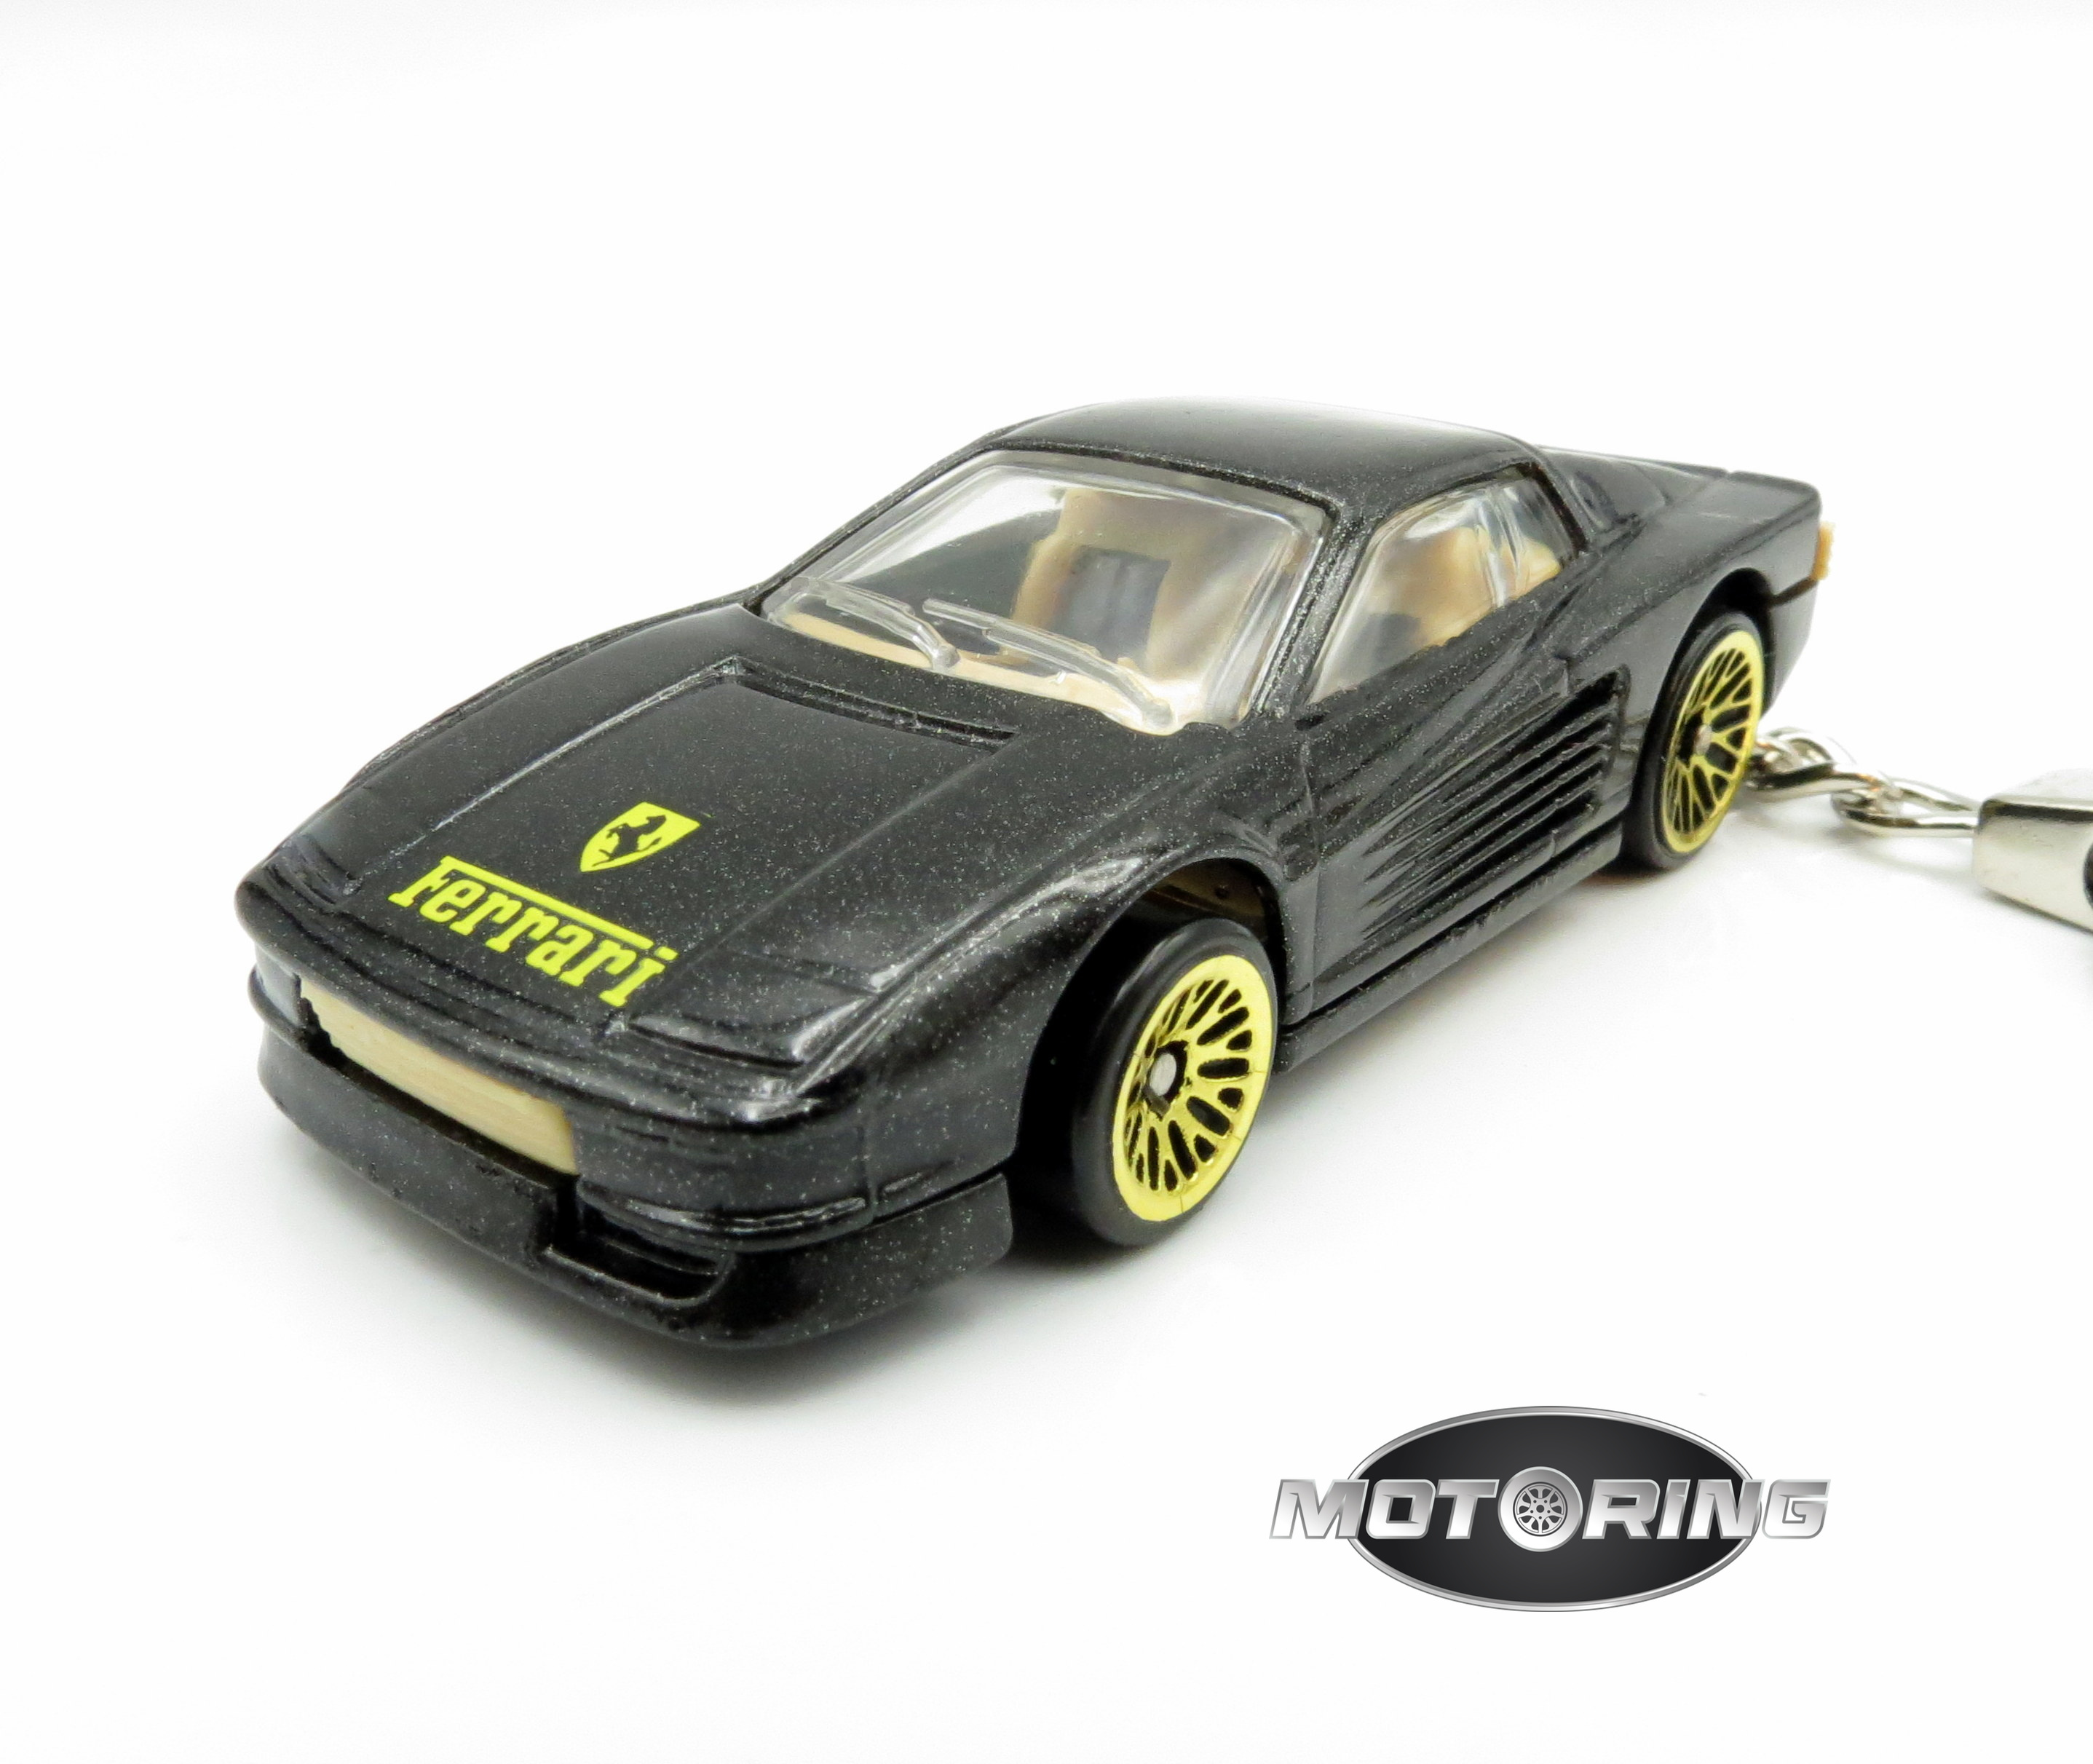 Keychain Ferrari Testarossa Black Car Rare Novelty 1:64 Diecast Key Ring